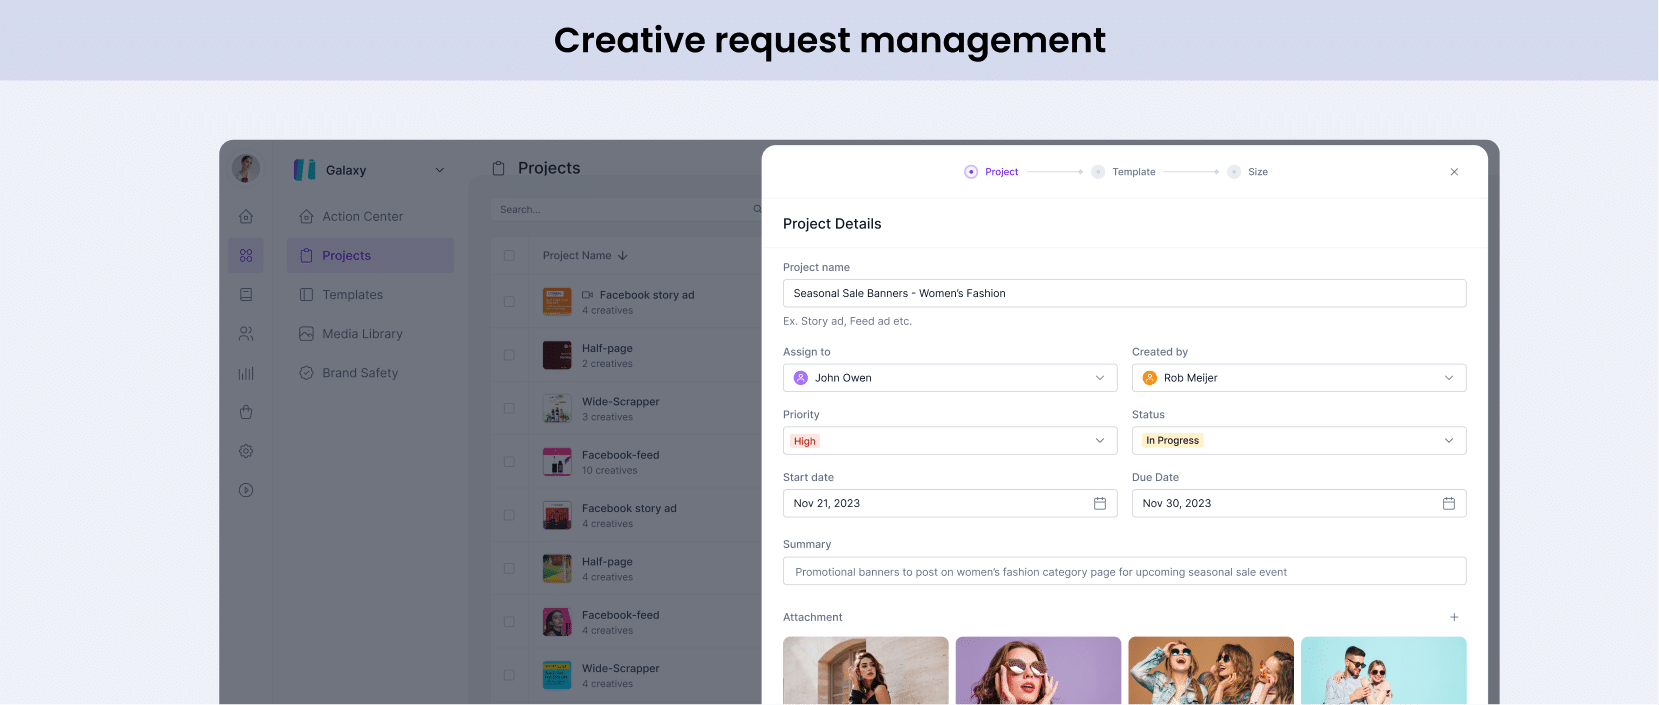 Creative request management